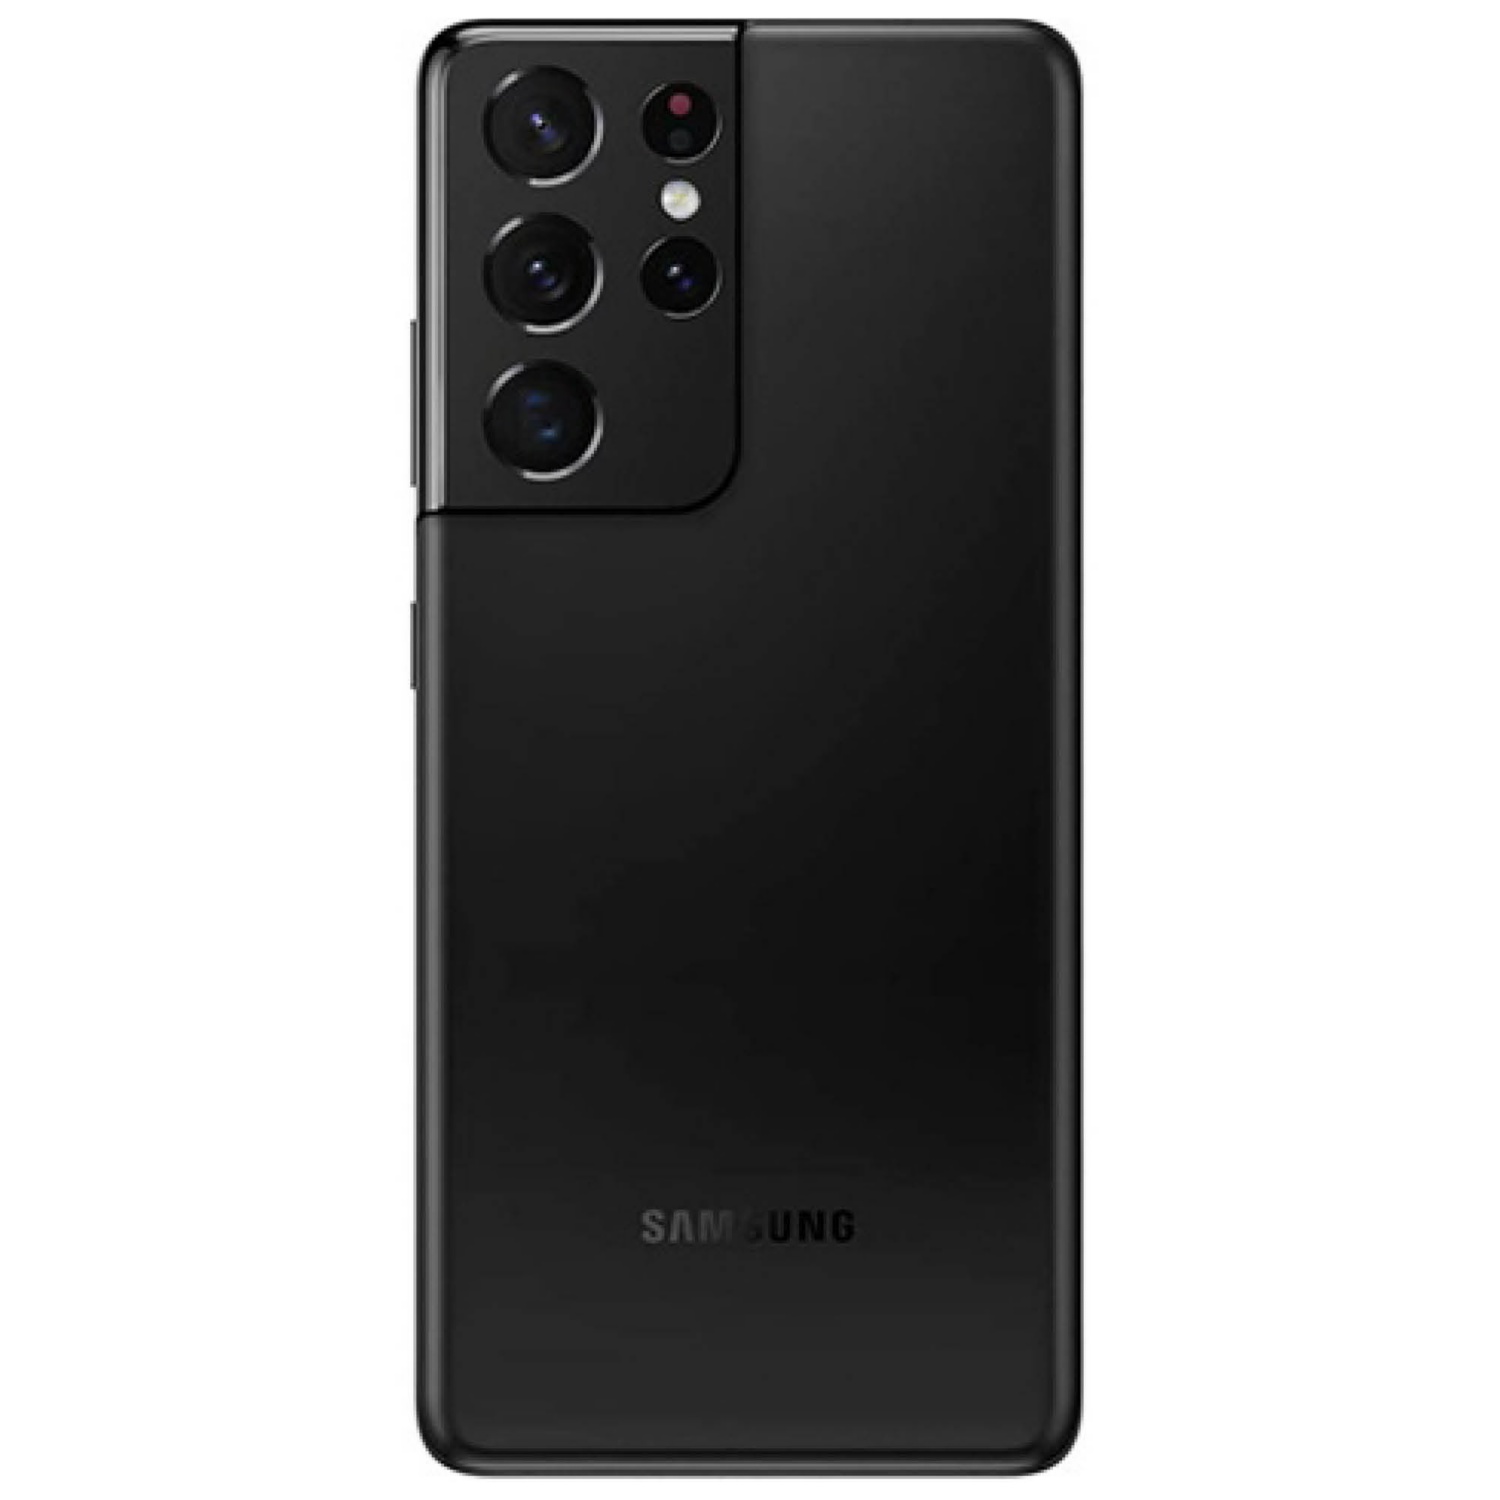 SAMSUNG Galaxy S21 Ultra 5G (dual sim) 256 GB Black